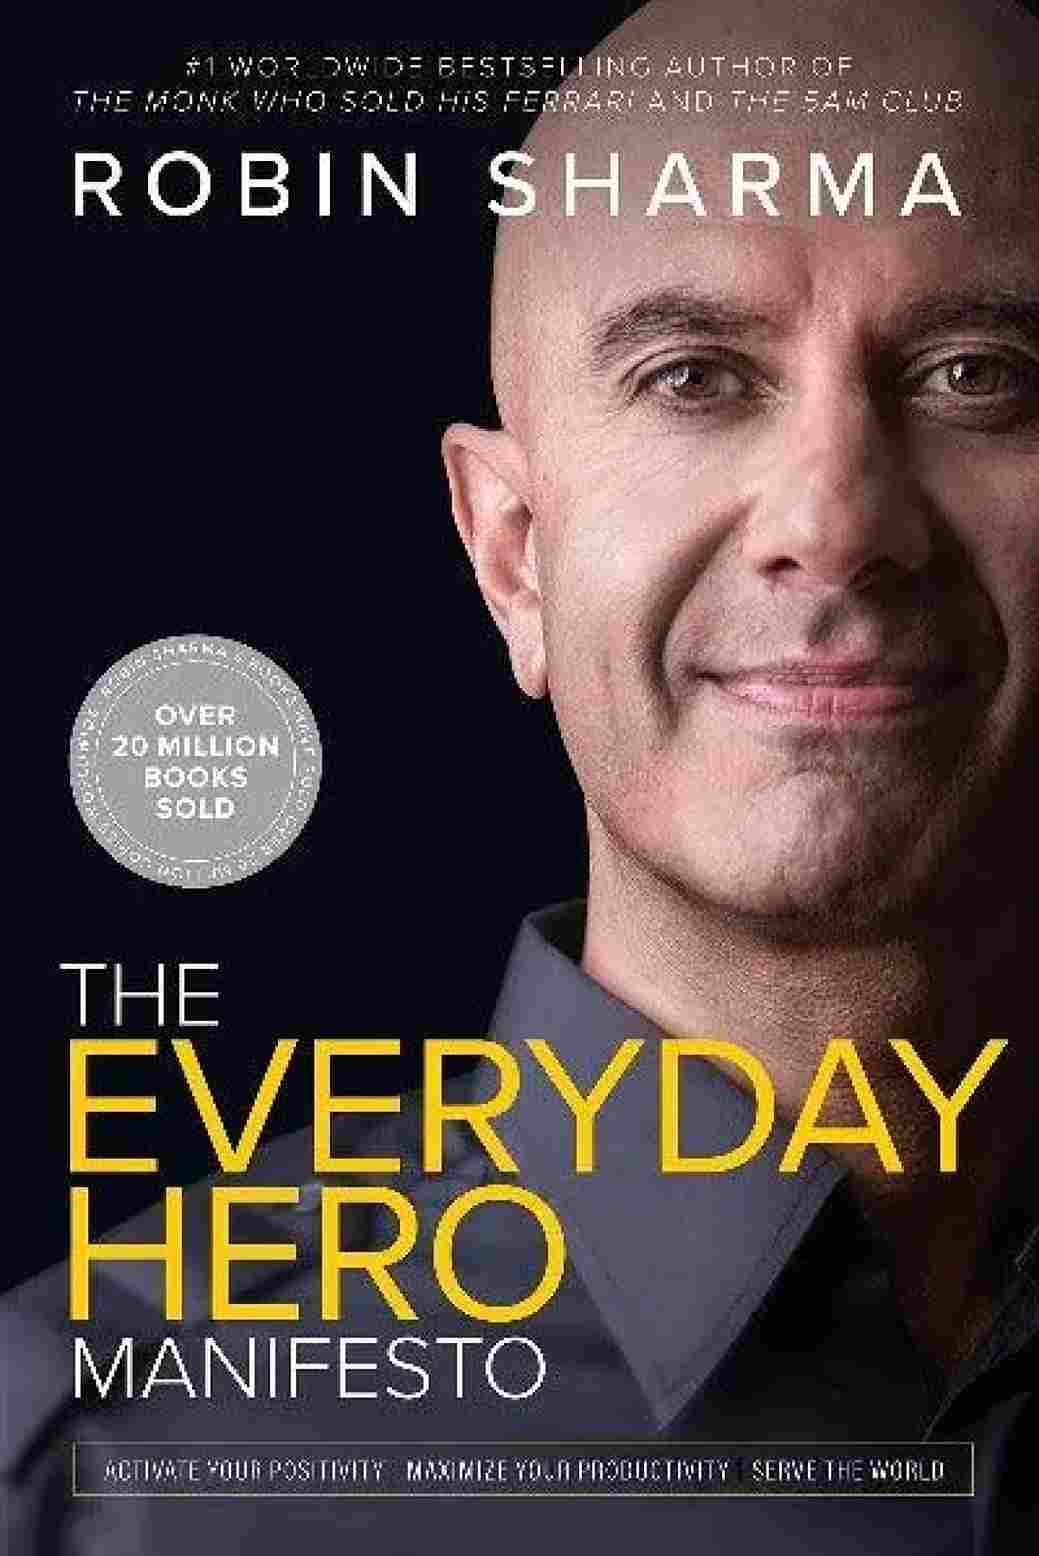 The Everyday Hero Manifesto (Paperback) - Robin Sharma